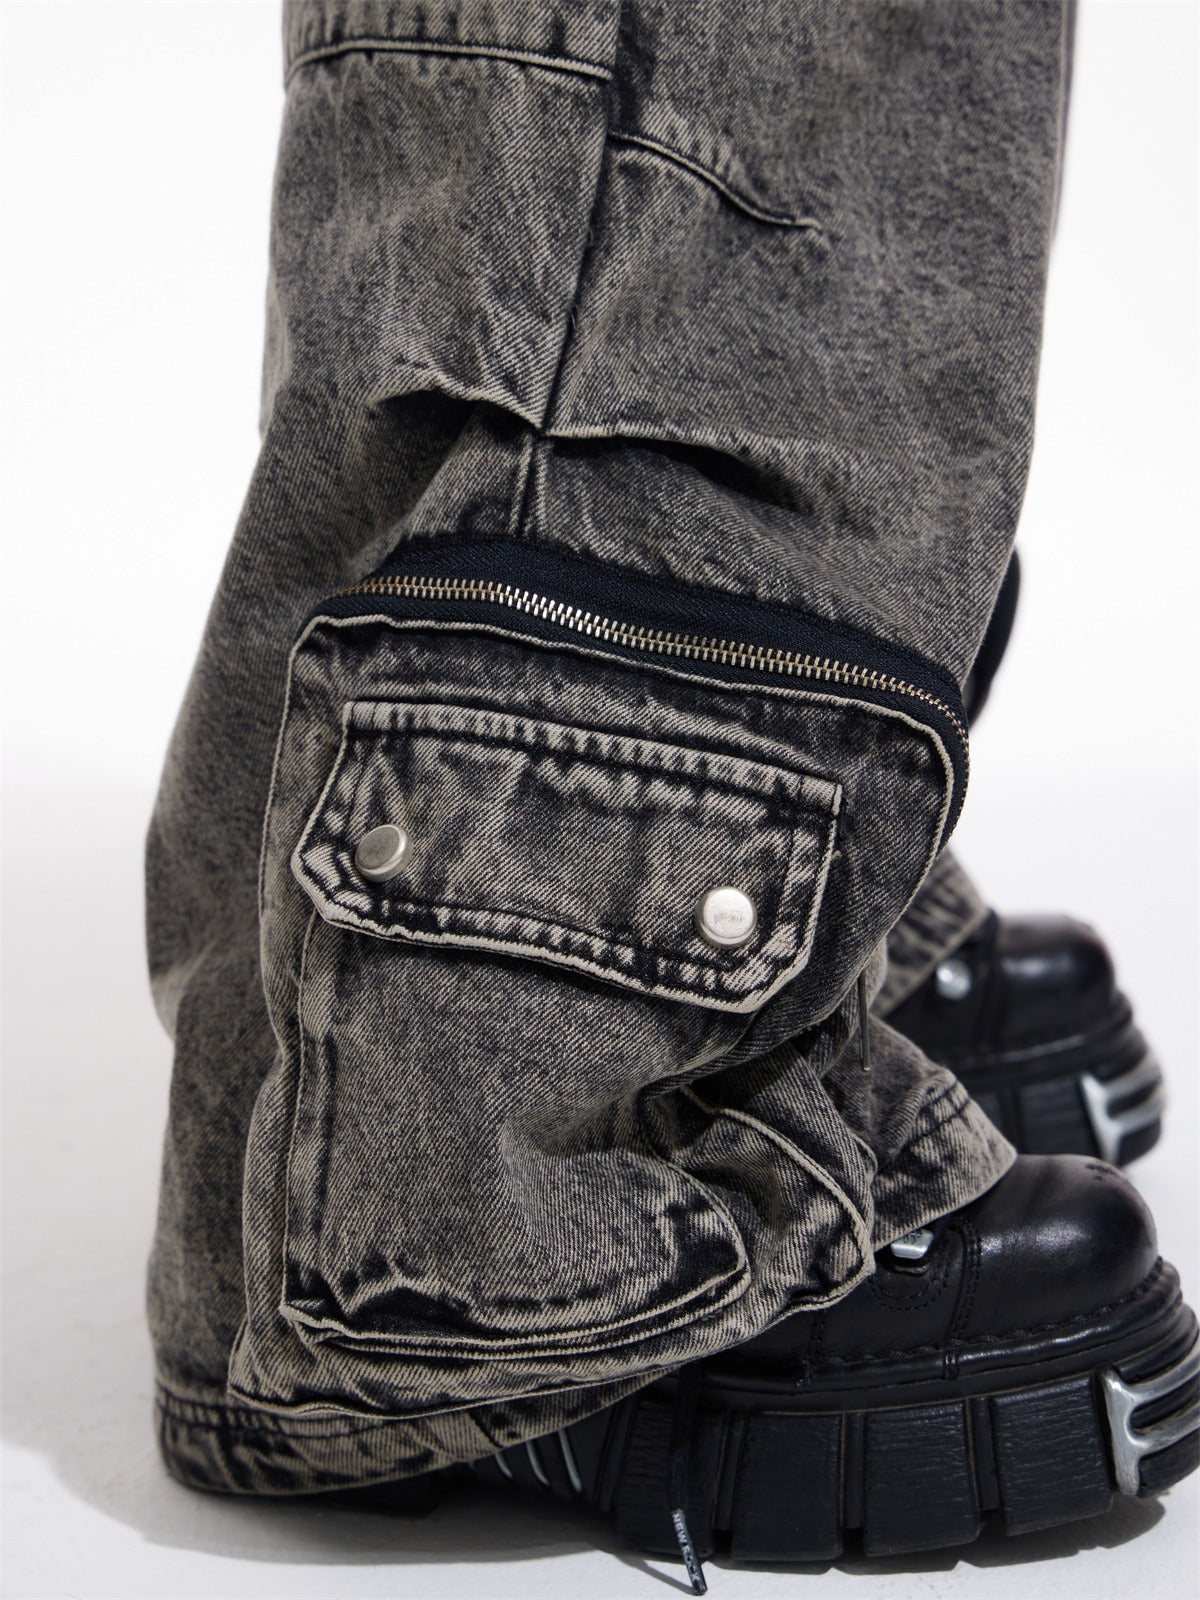 Multi-pocket jeans pants